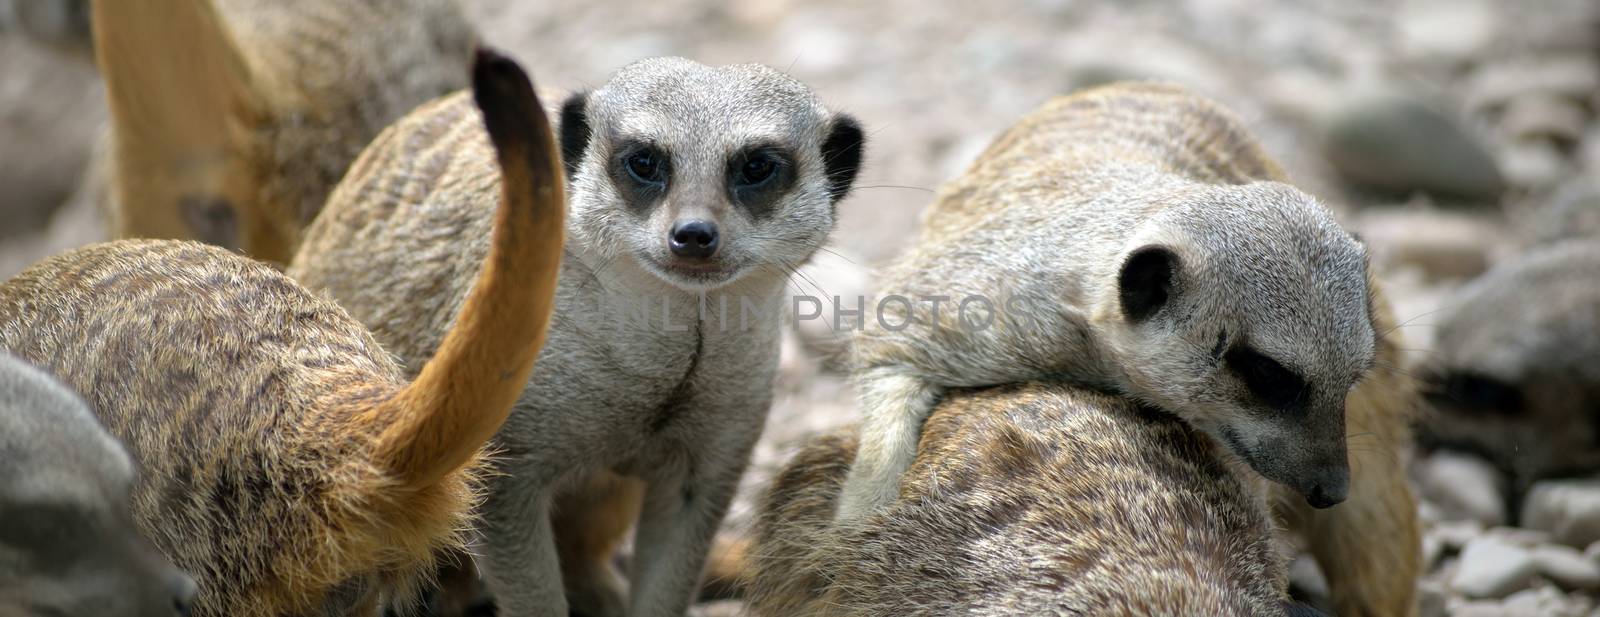 meerkats in fota wildlife park near cobh county cork ireland